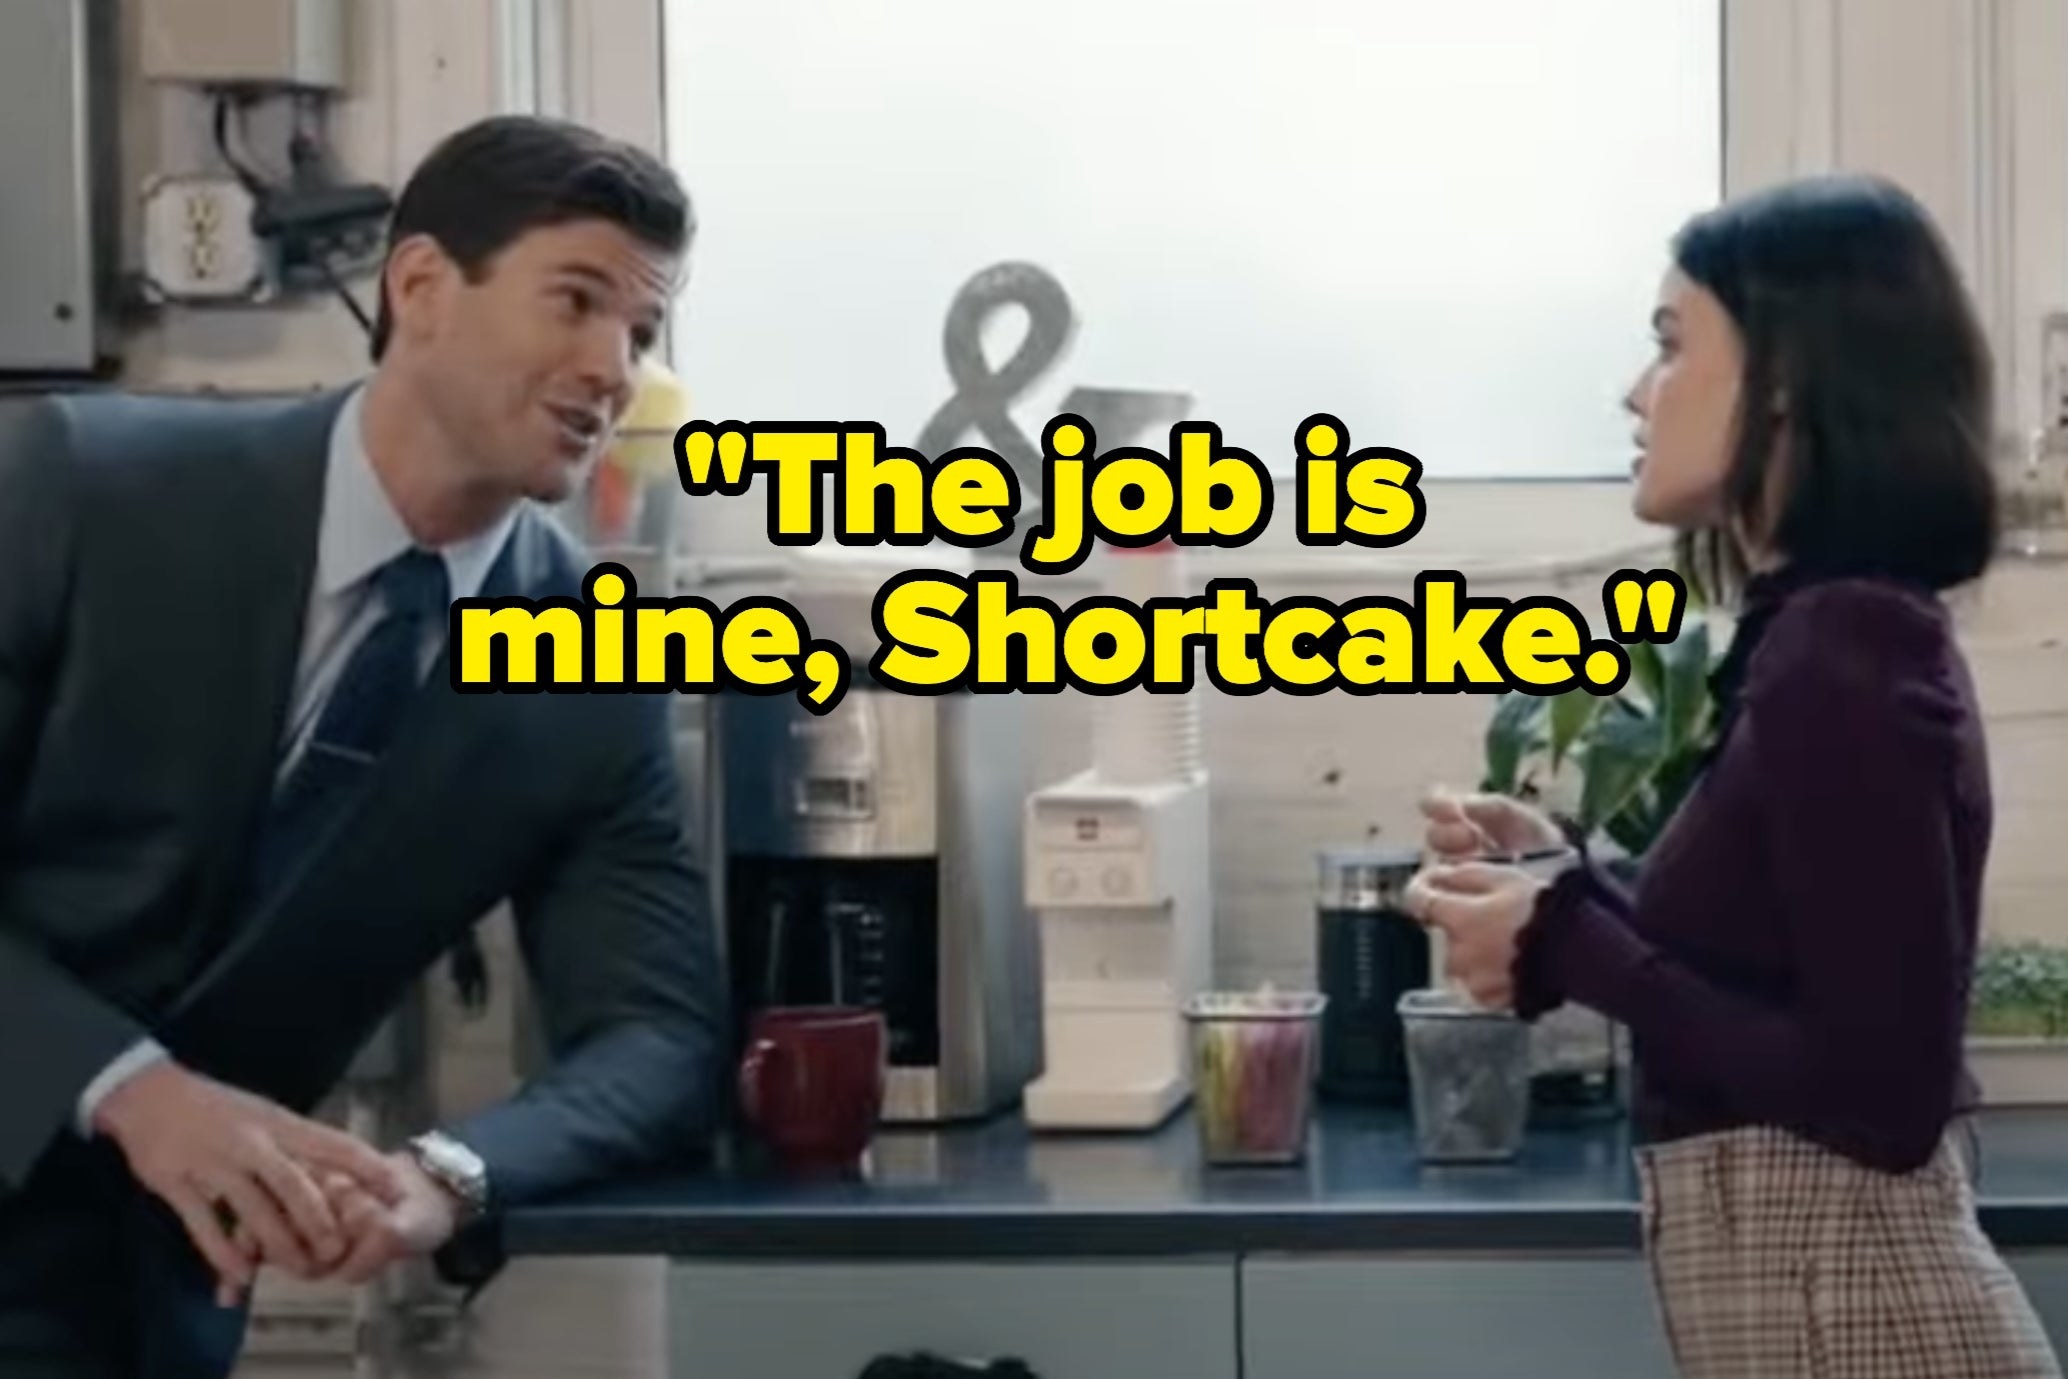 &quot;The job is mine, Shortcake&quot;